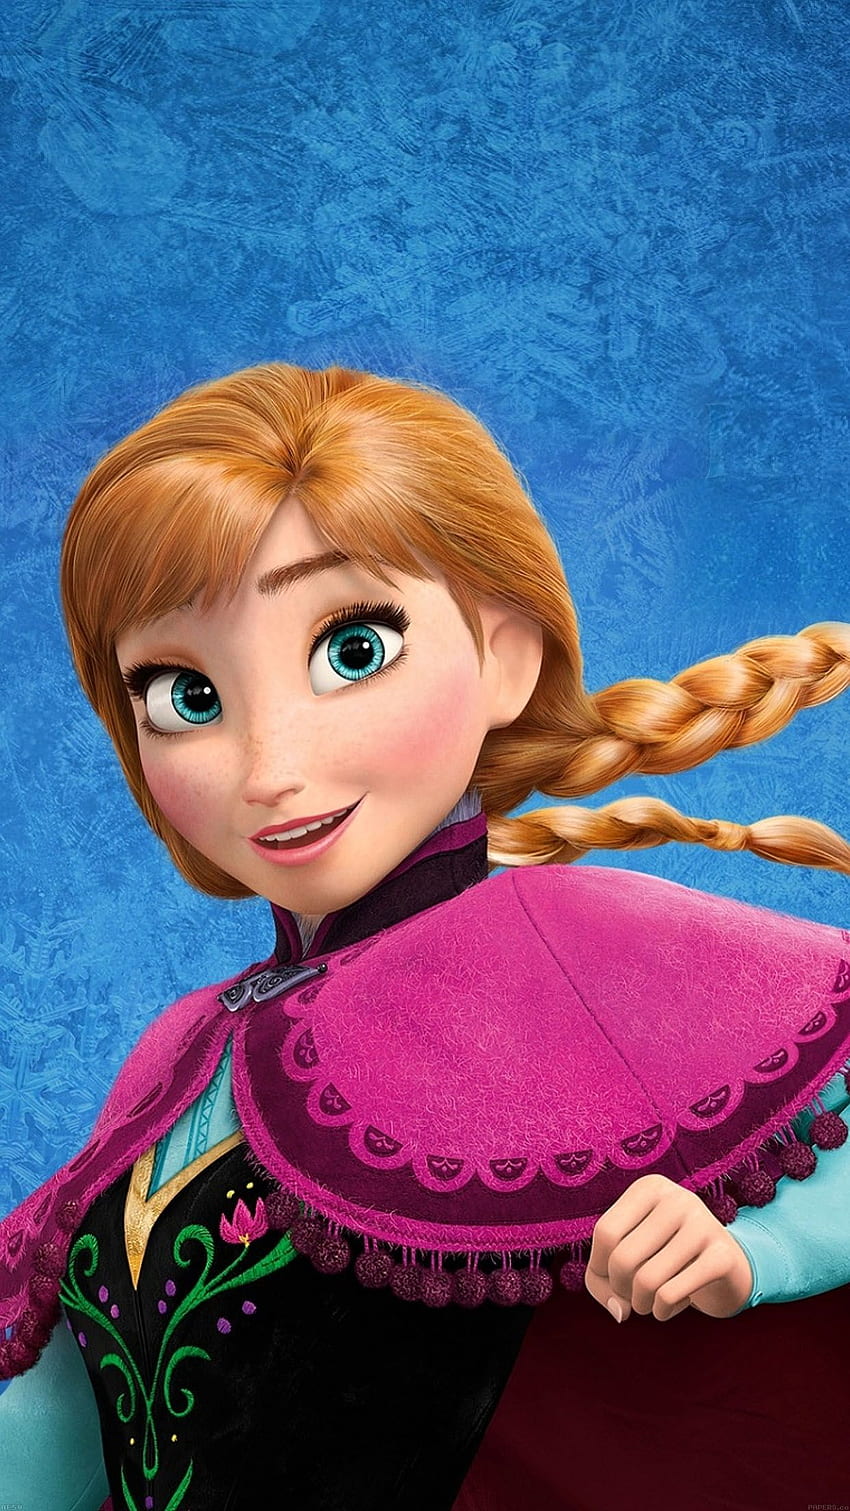 Frozen Disney Princesa Anna de Arendelle Illust Papel de parede de celular HD